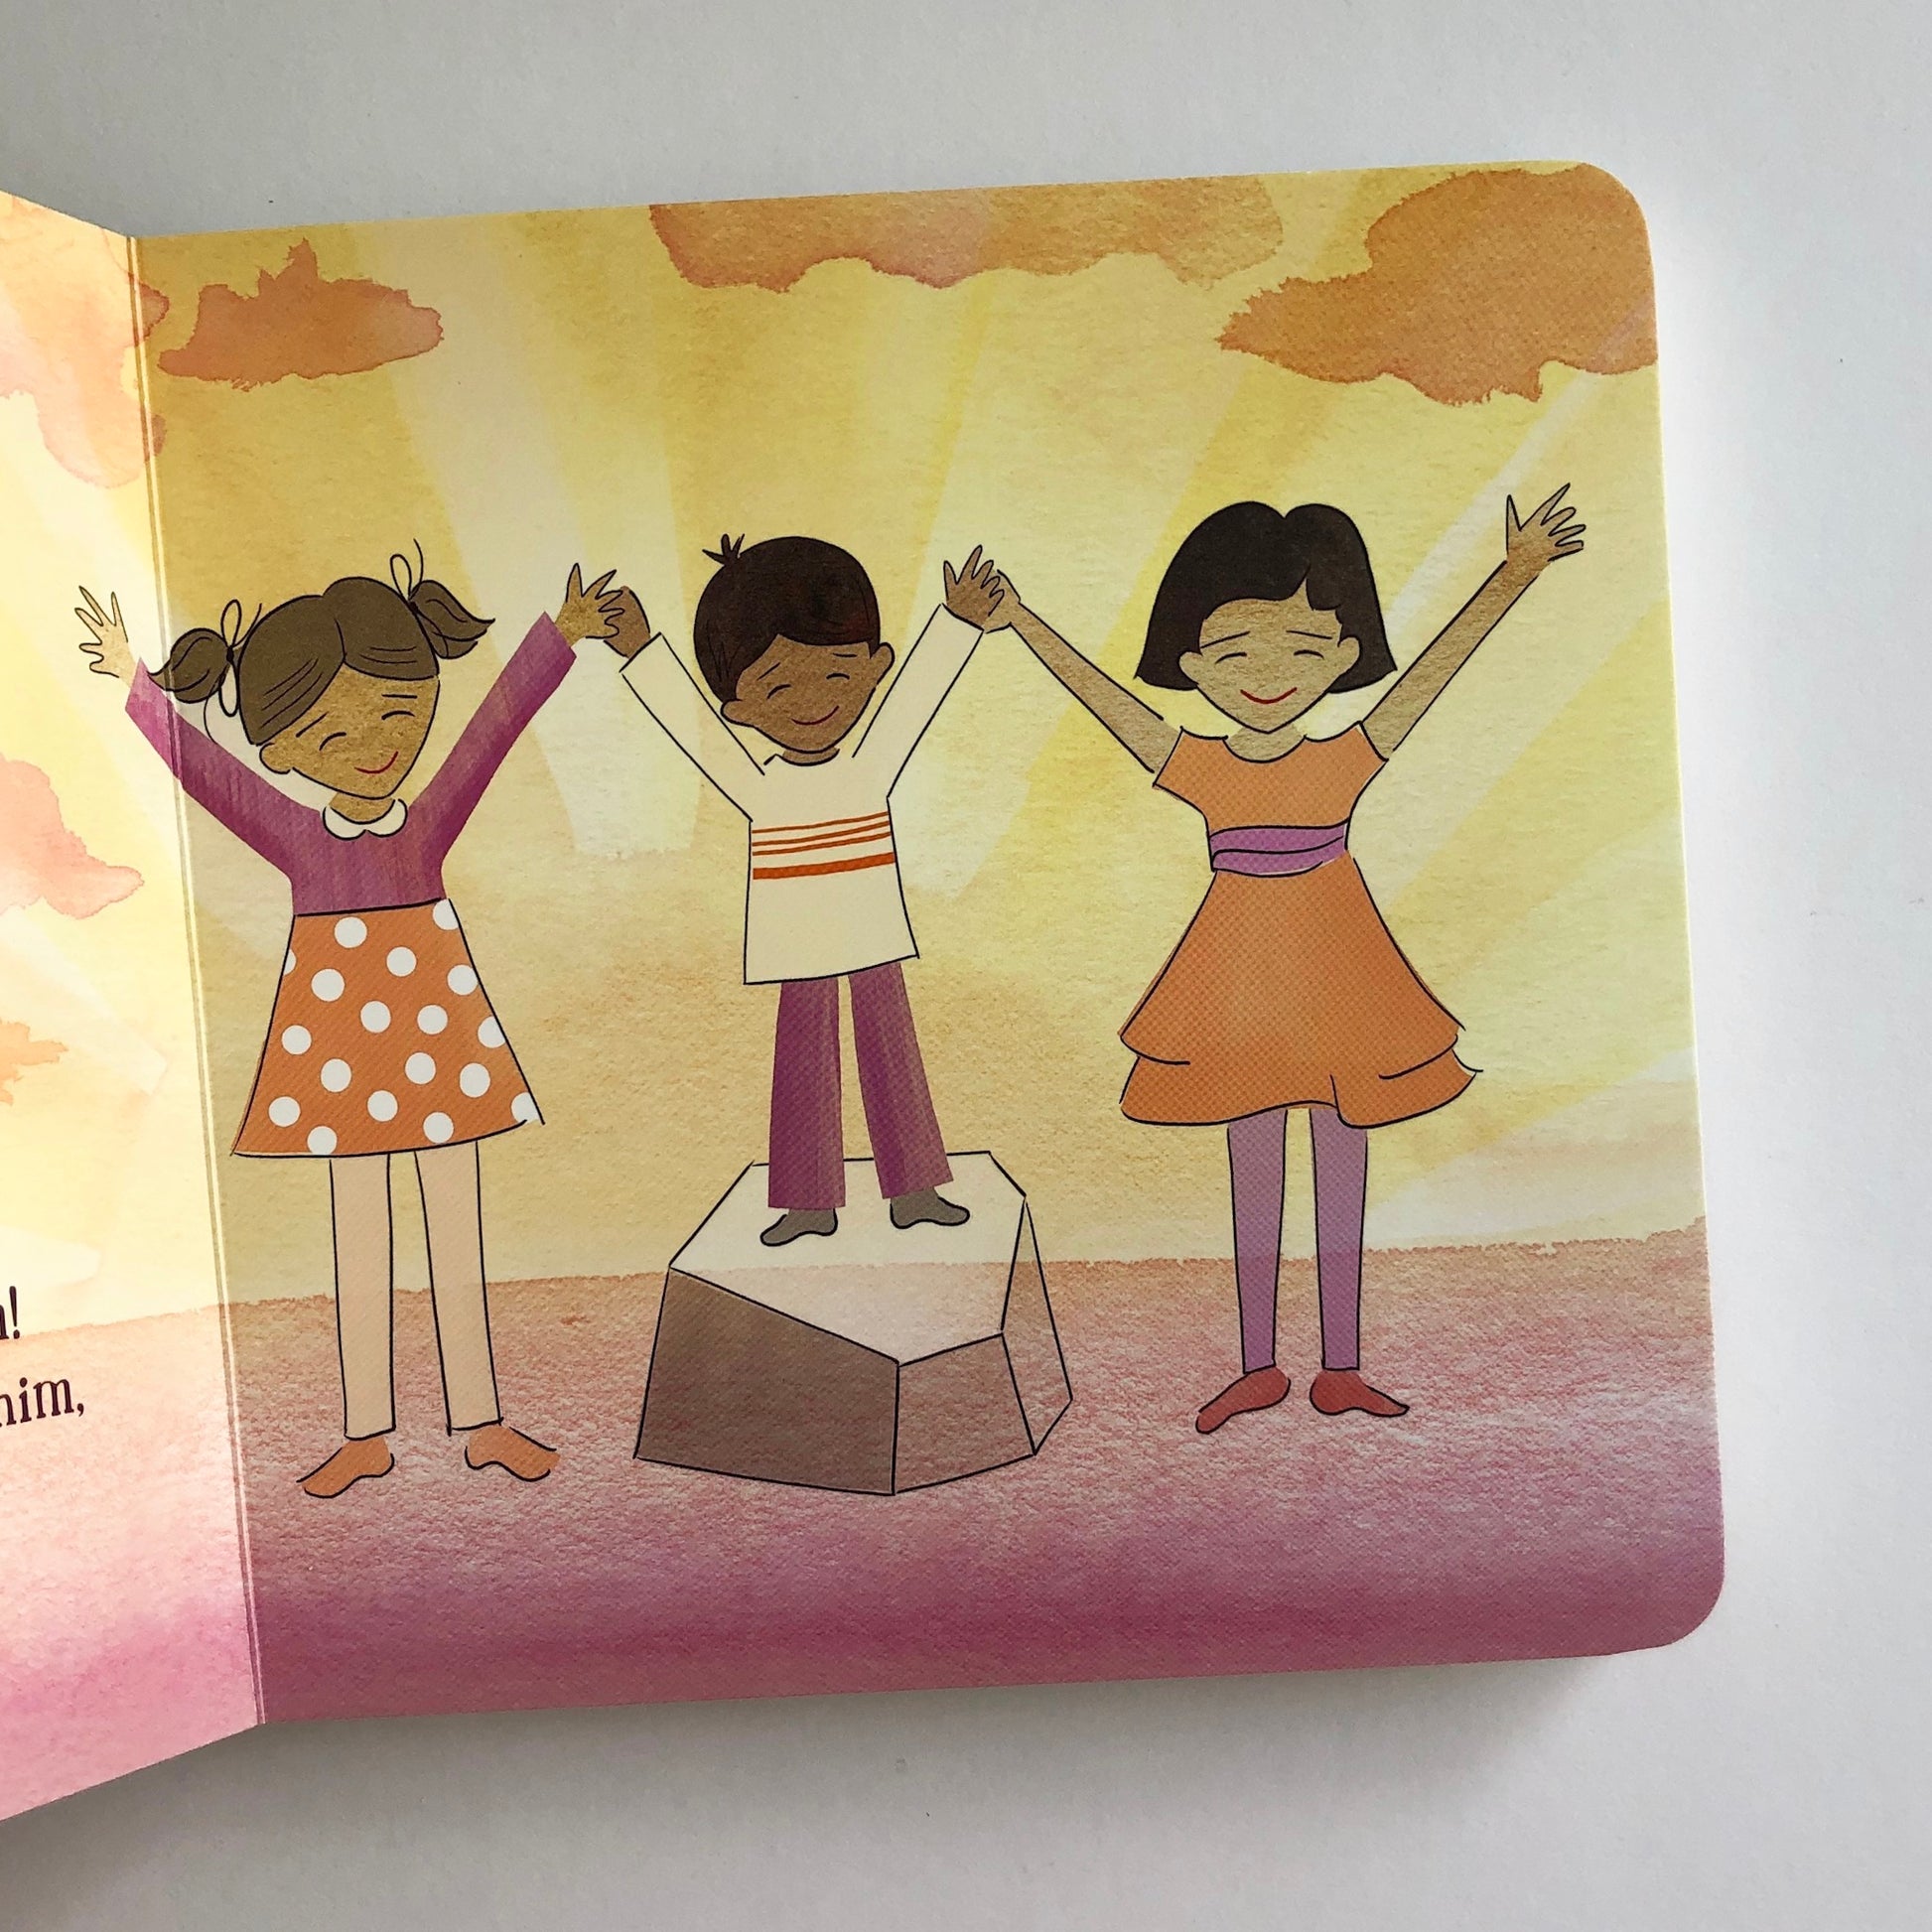 Psalms of Praise: A Movement Primer - tiny-seeds-bookshop-christian-books-for-kids